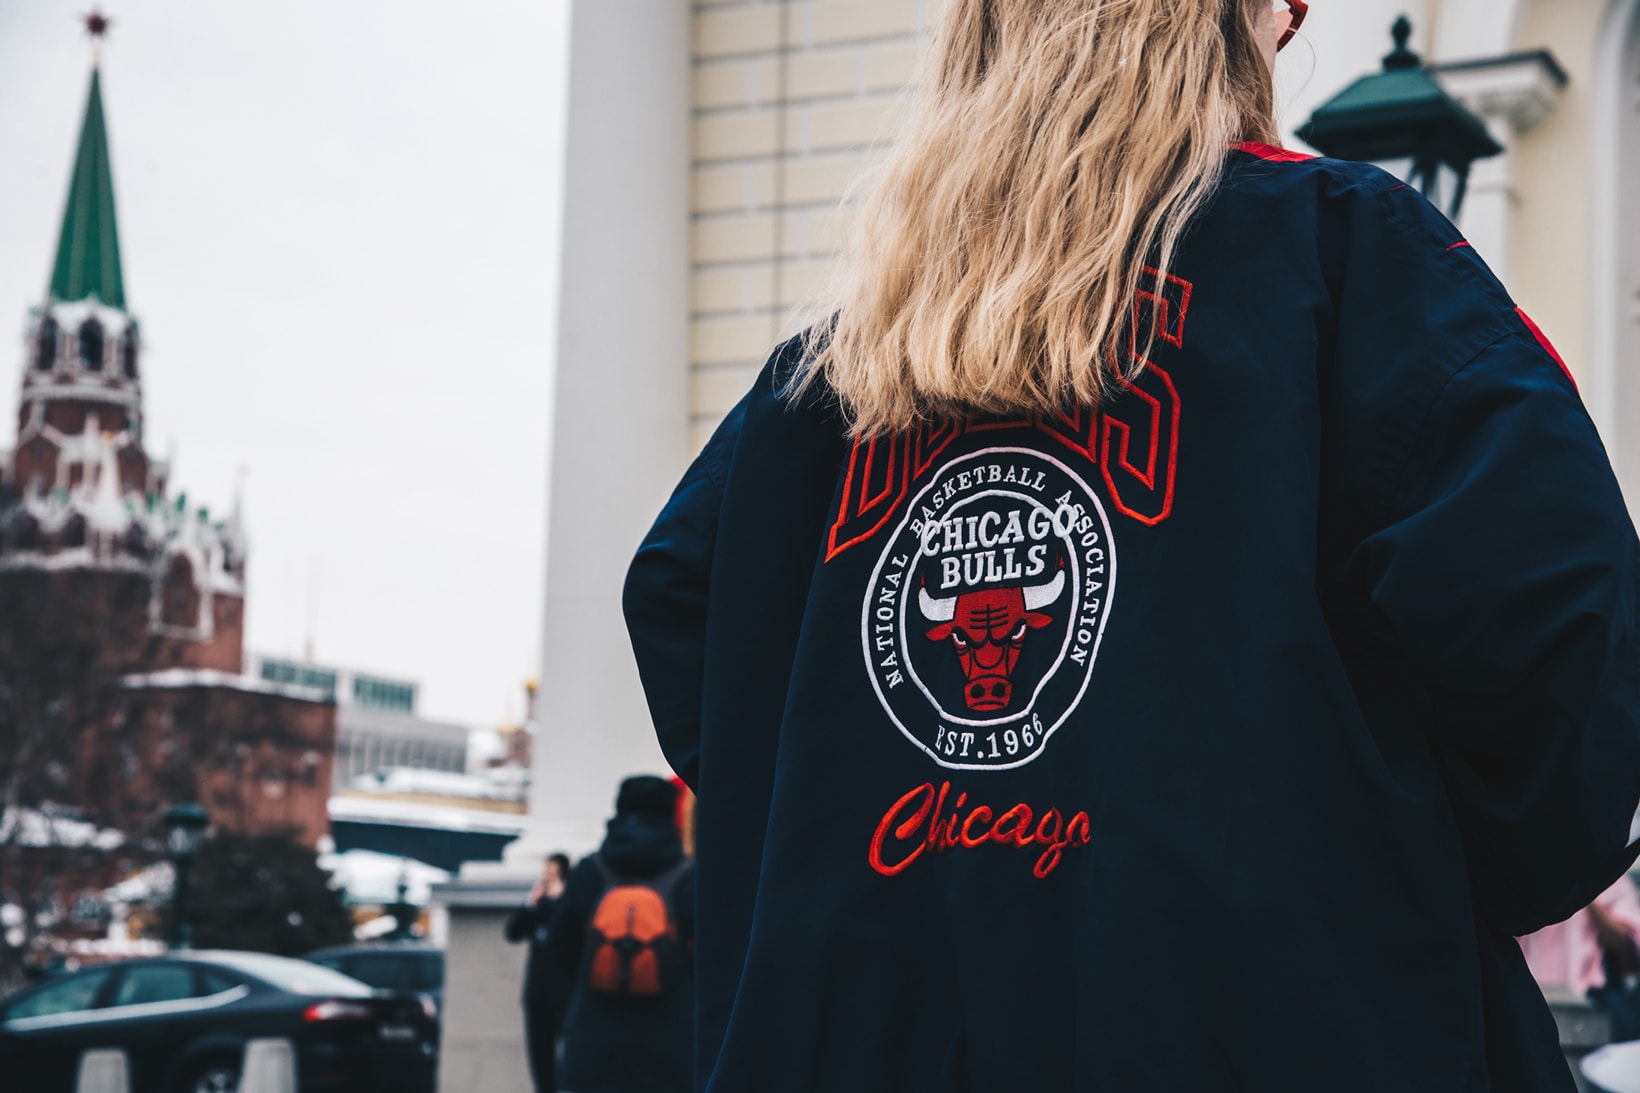 Streetsnaps Moscow Fashion Week 2018 Varsity Chicago Bulls Jacket Black Red